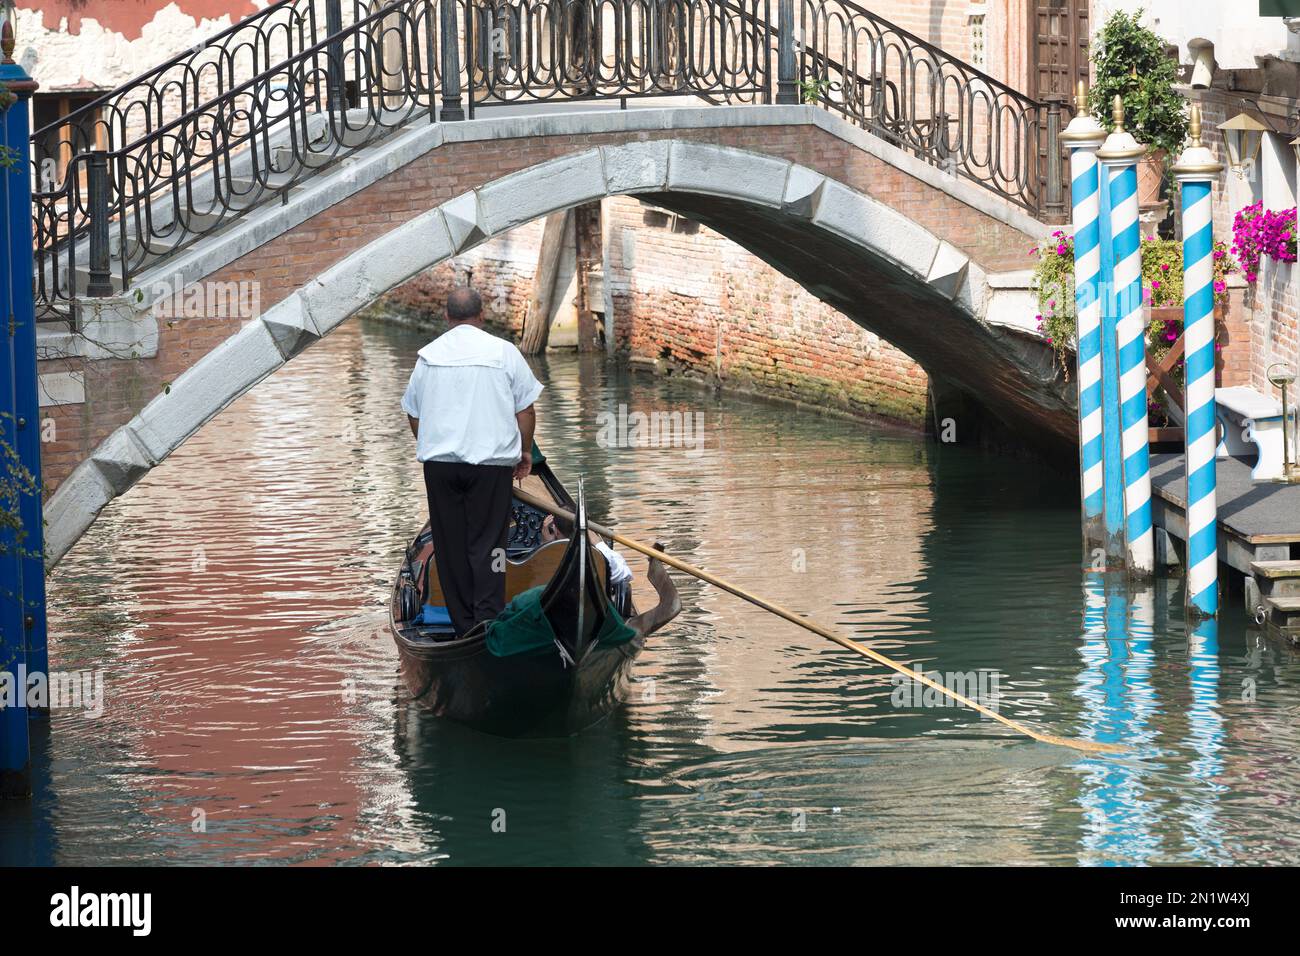 Italy, Venice, gondola along the Rio Della Fava near the Bridge of Sighs. Stock Photo